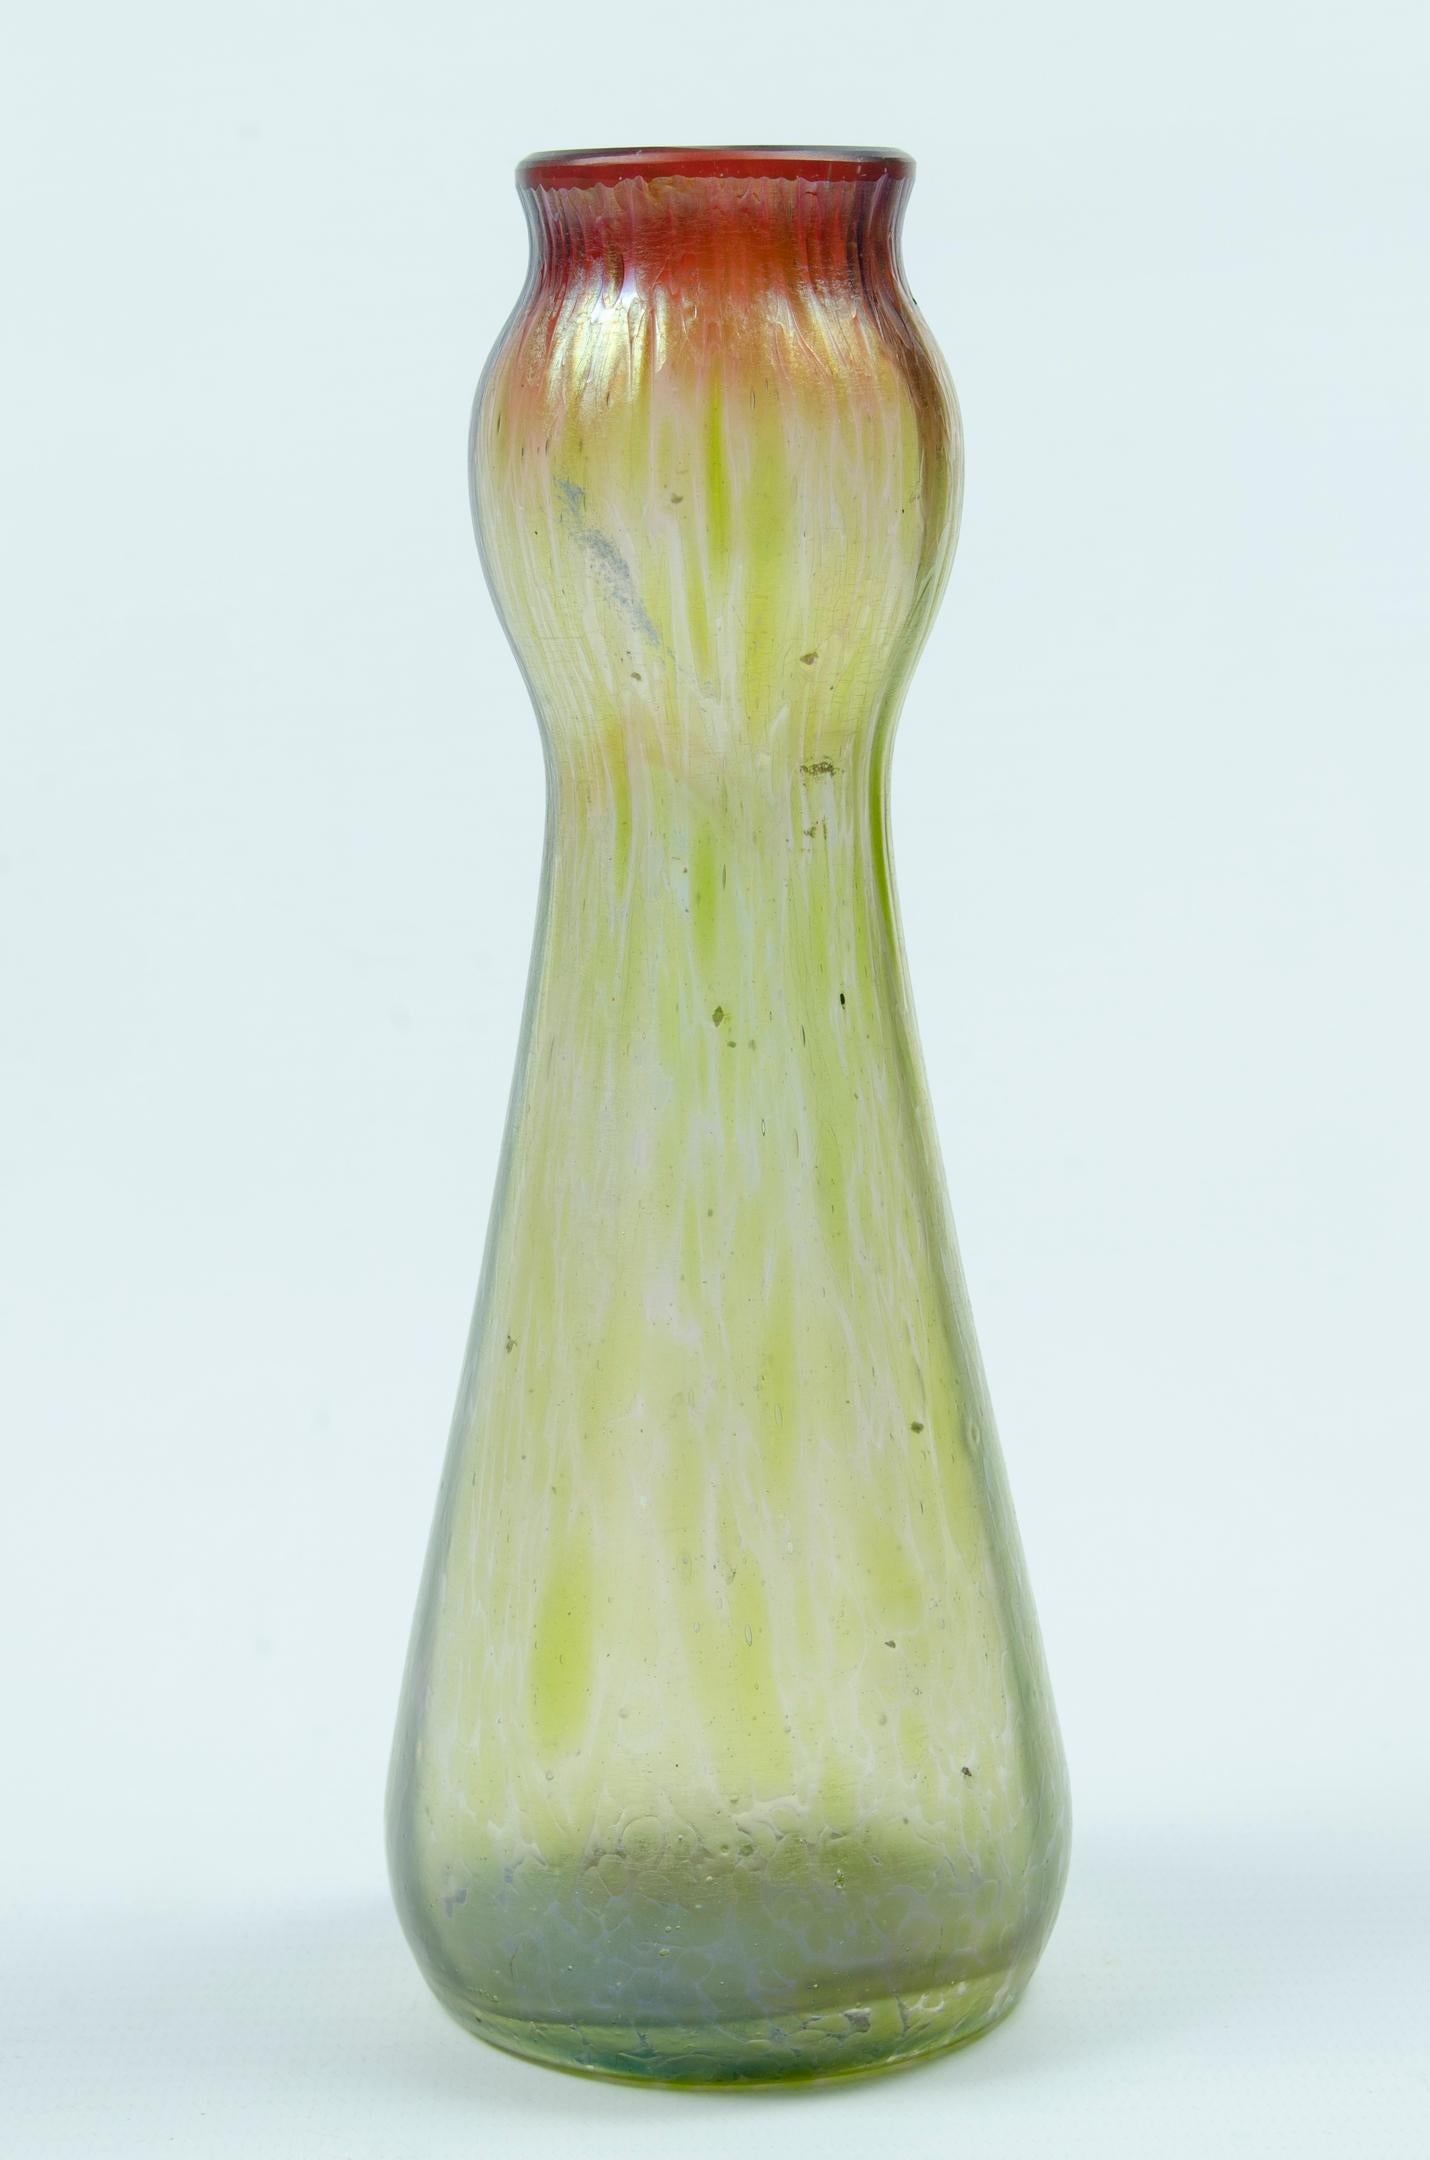 Iridescent glass vase attributed to Loetz
origin Austria, circa 1900
perfect condition
oily motif.